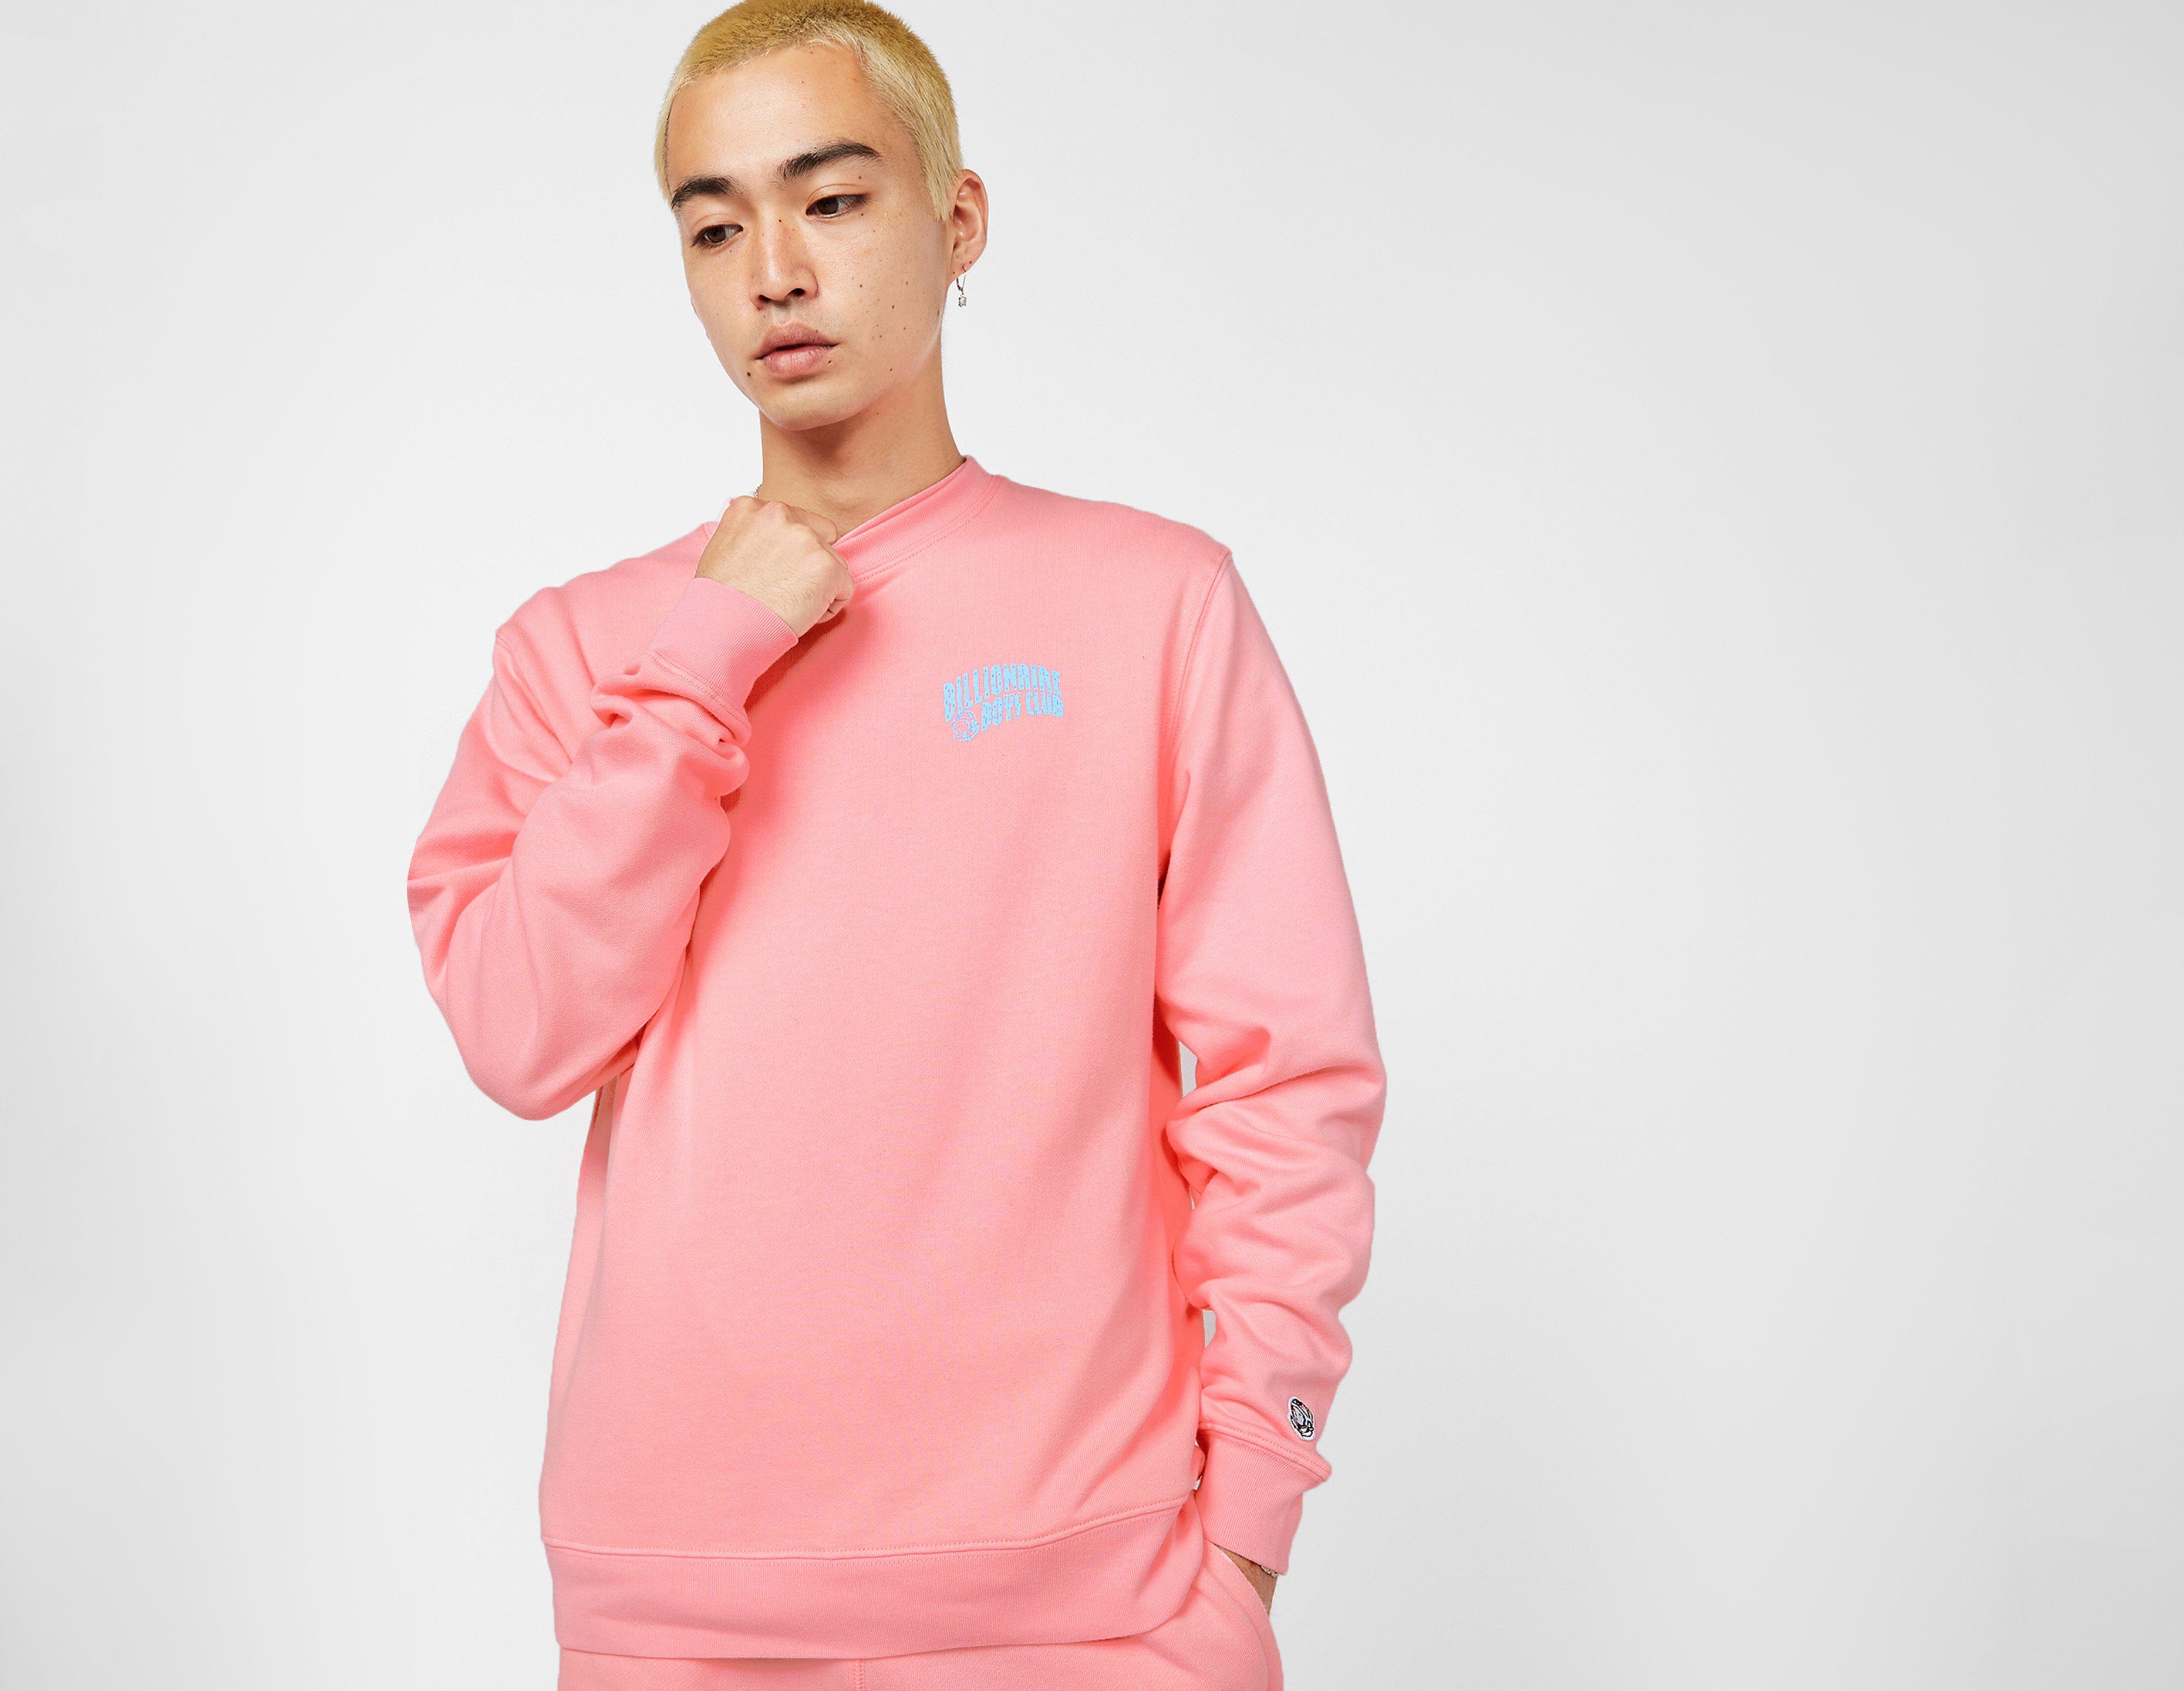 jacket breasted skissat - t-shirt Pink - Neck - Arch Charleen Healthdesign? Vit med Logo high Small Topman single Verde stadsmotiv shine | Sweatshirt Crew